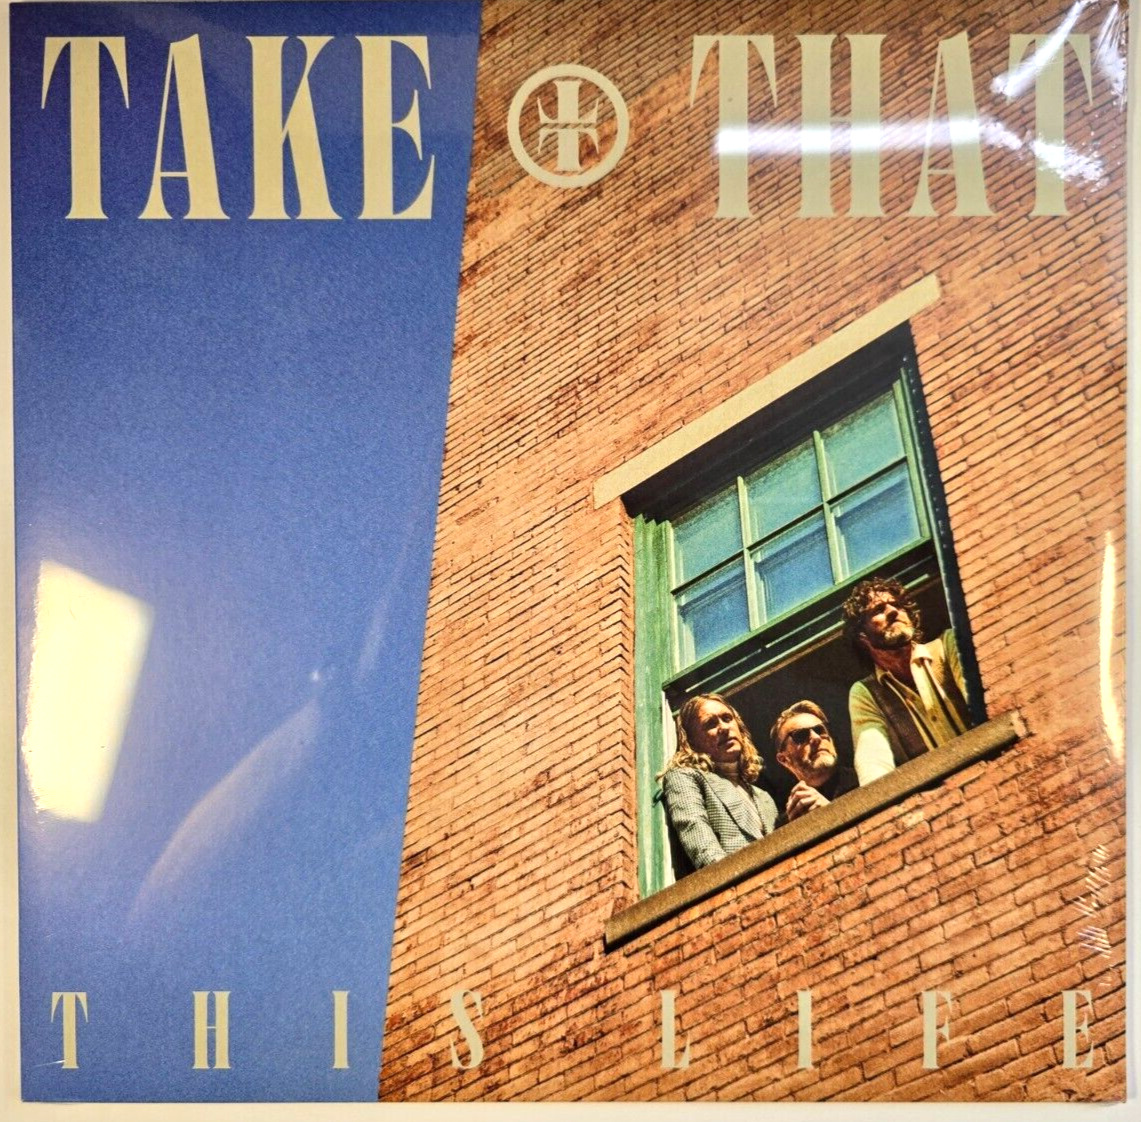 Take That – This Life LP Album vinyl record 2023 pop rock on EMI Black